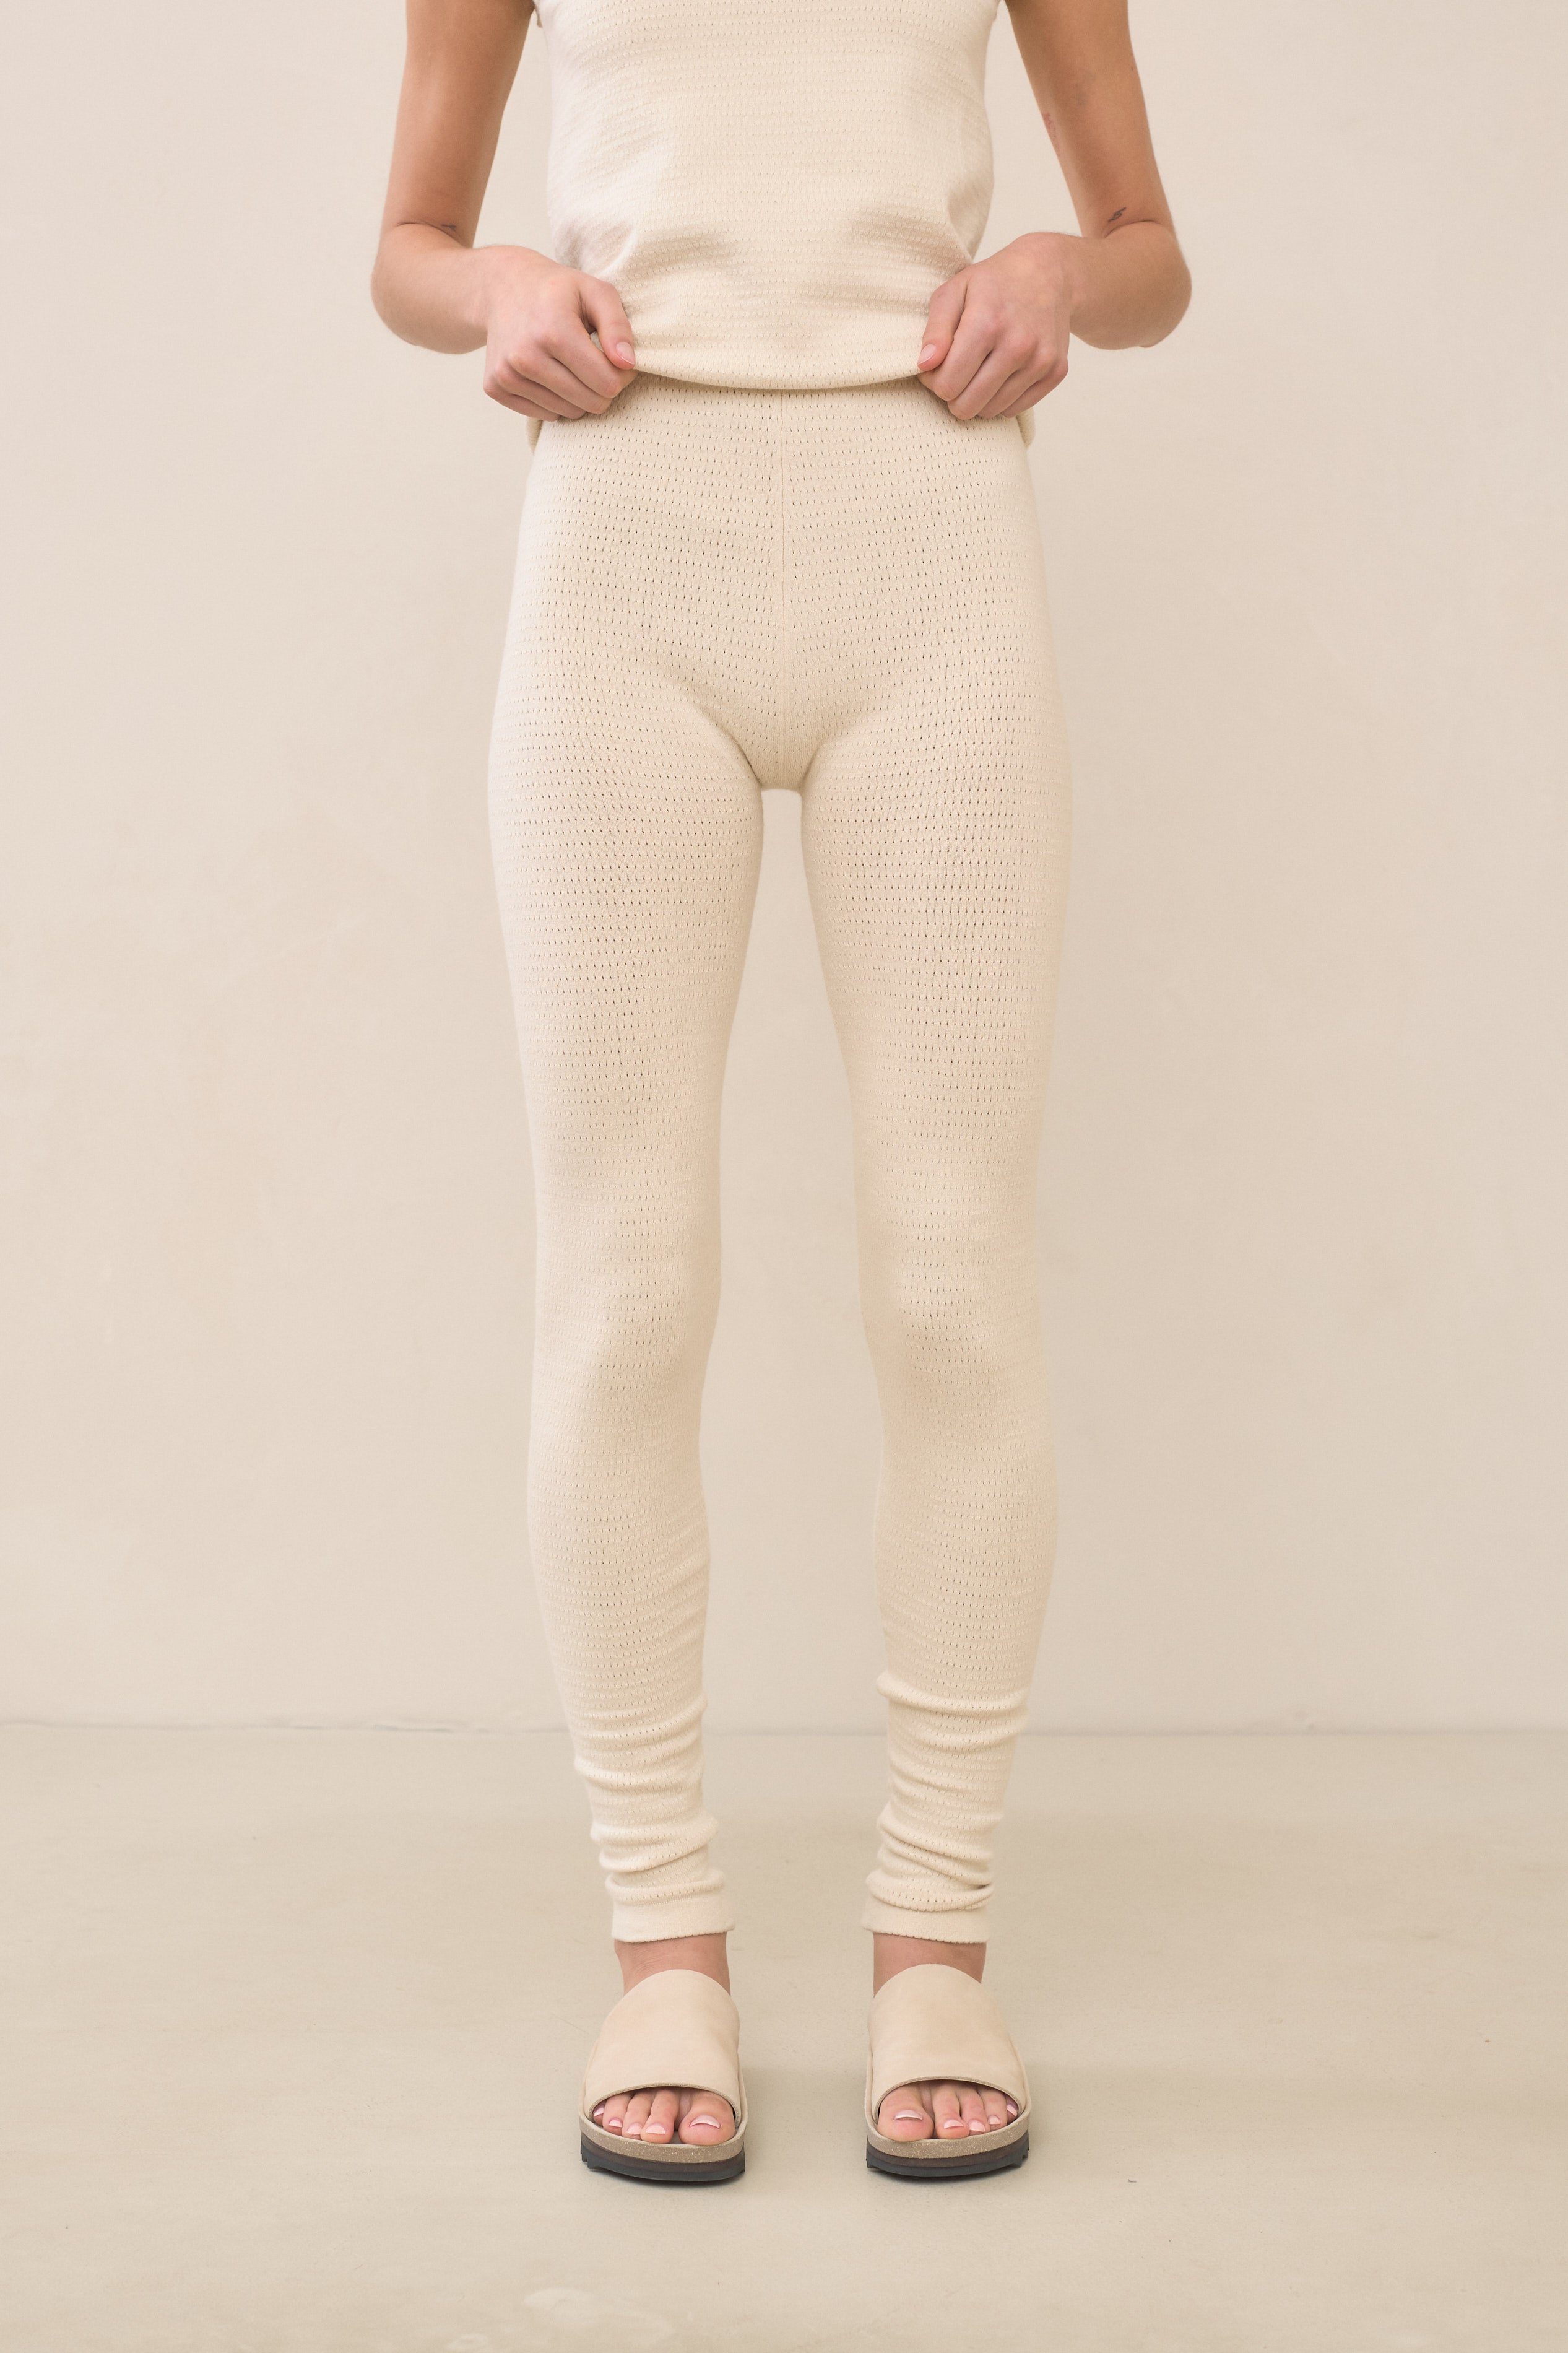 ZARA Women's Faux Leather Skinny Leggings Taupe Gray Size Small New | eBay